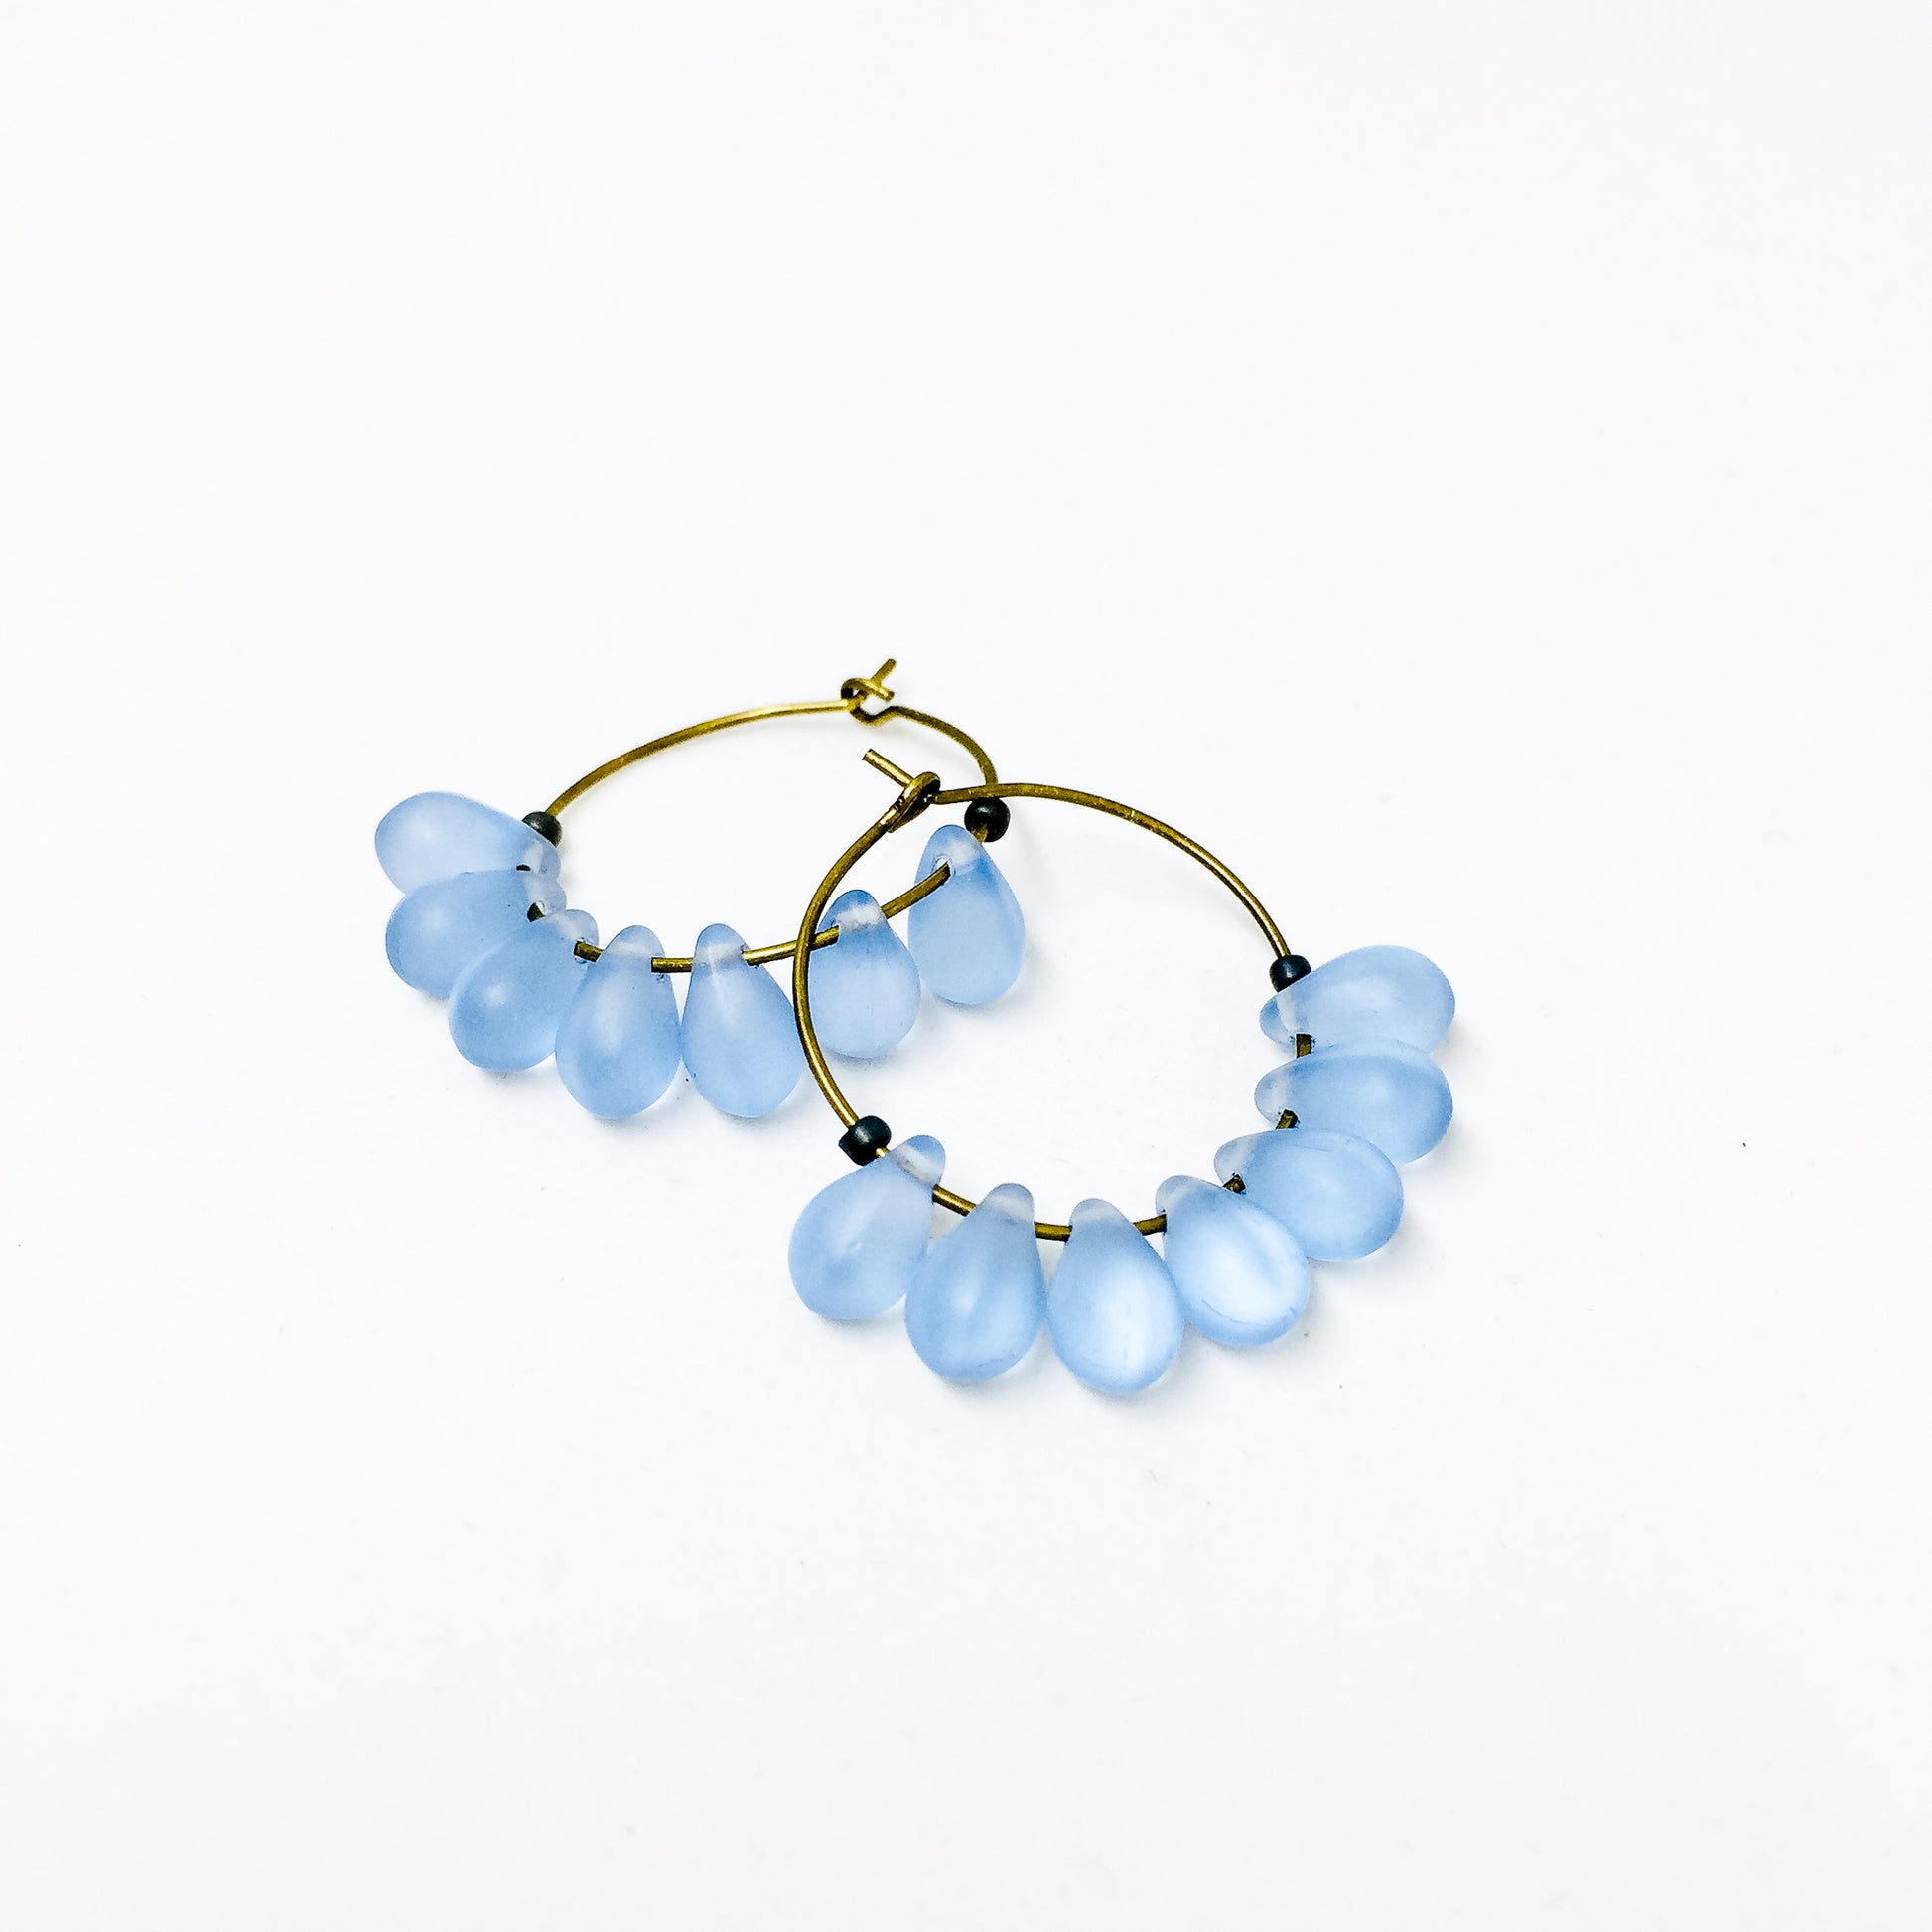 Dewdrop beaded glass hoop earrings in sky blue